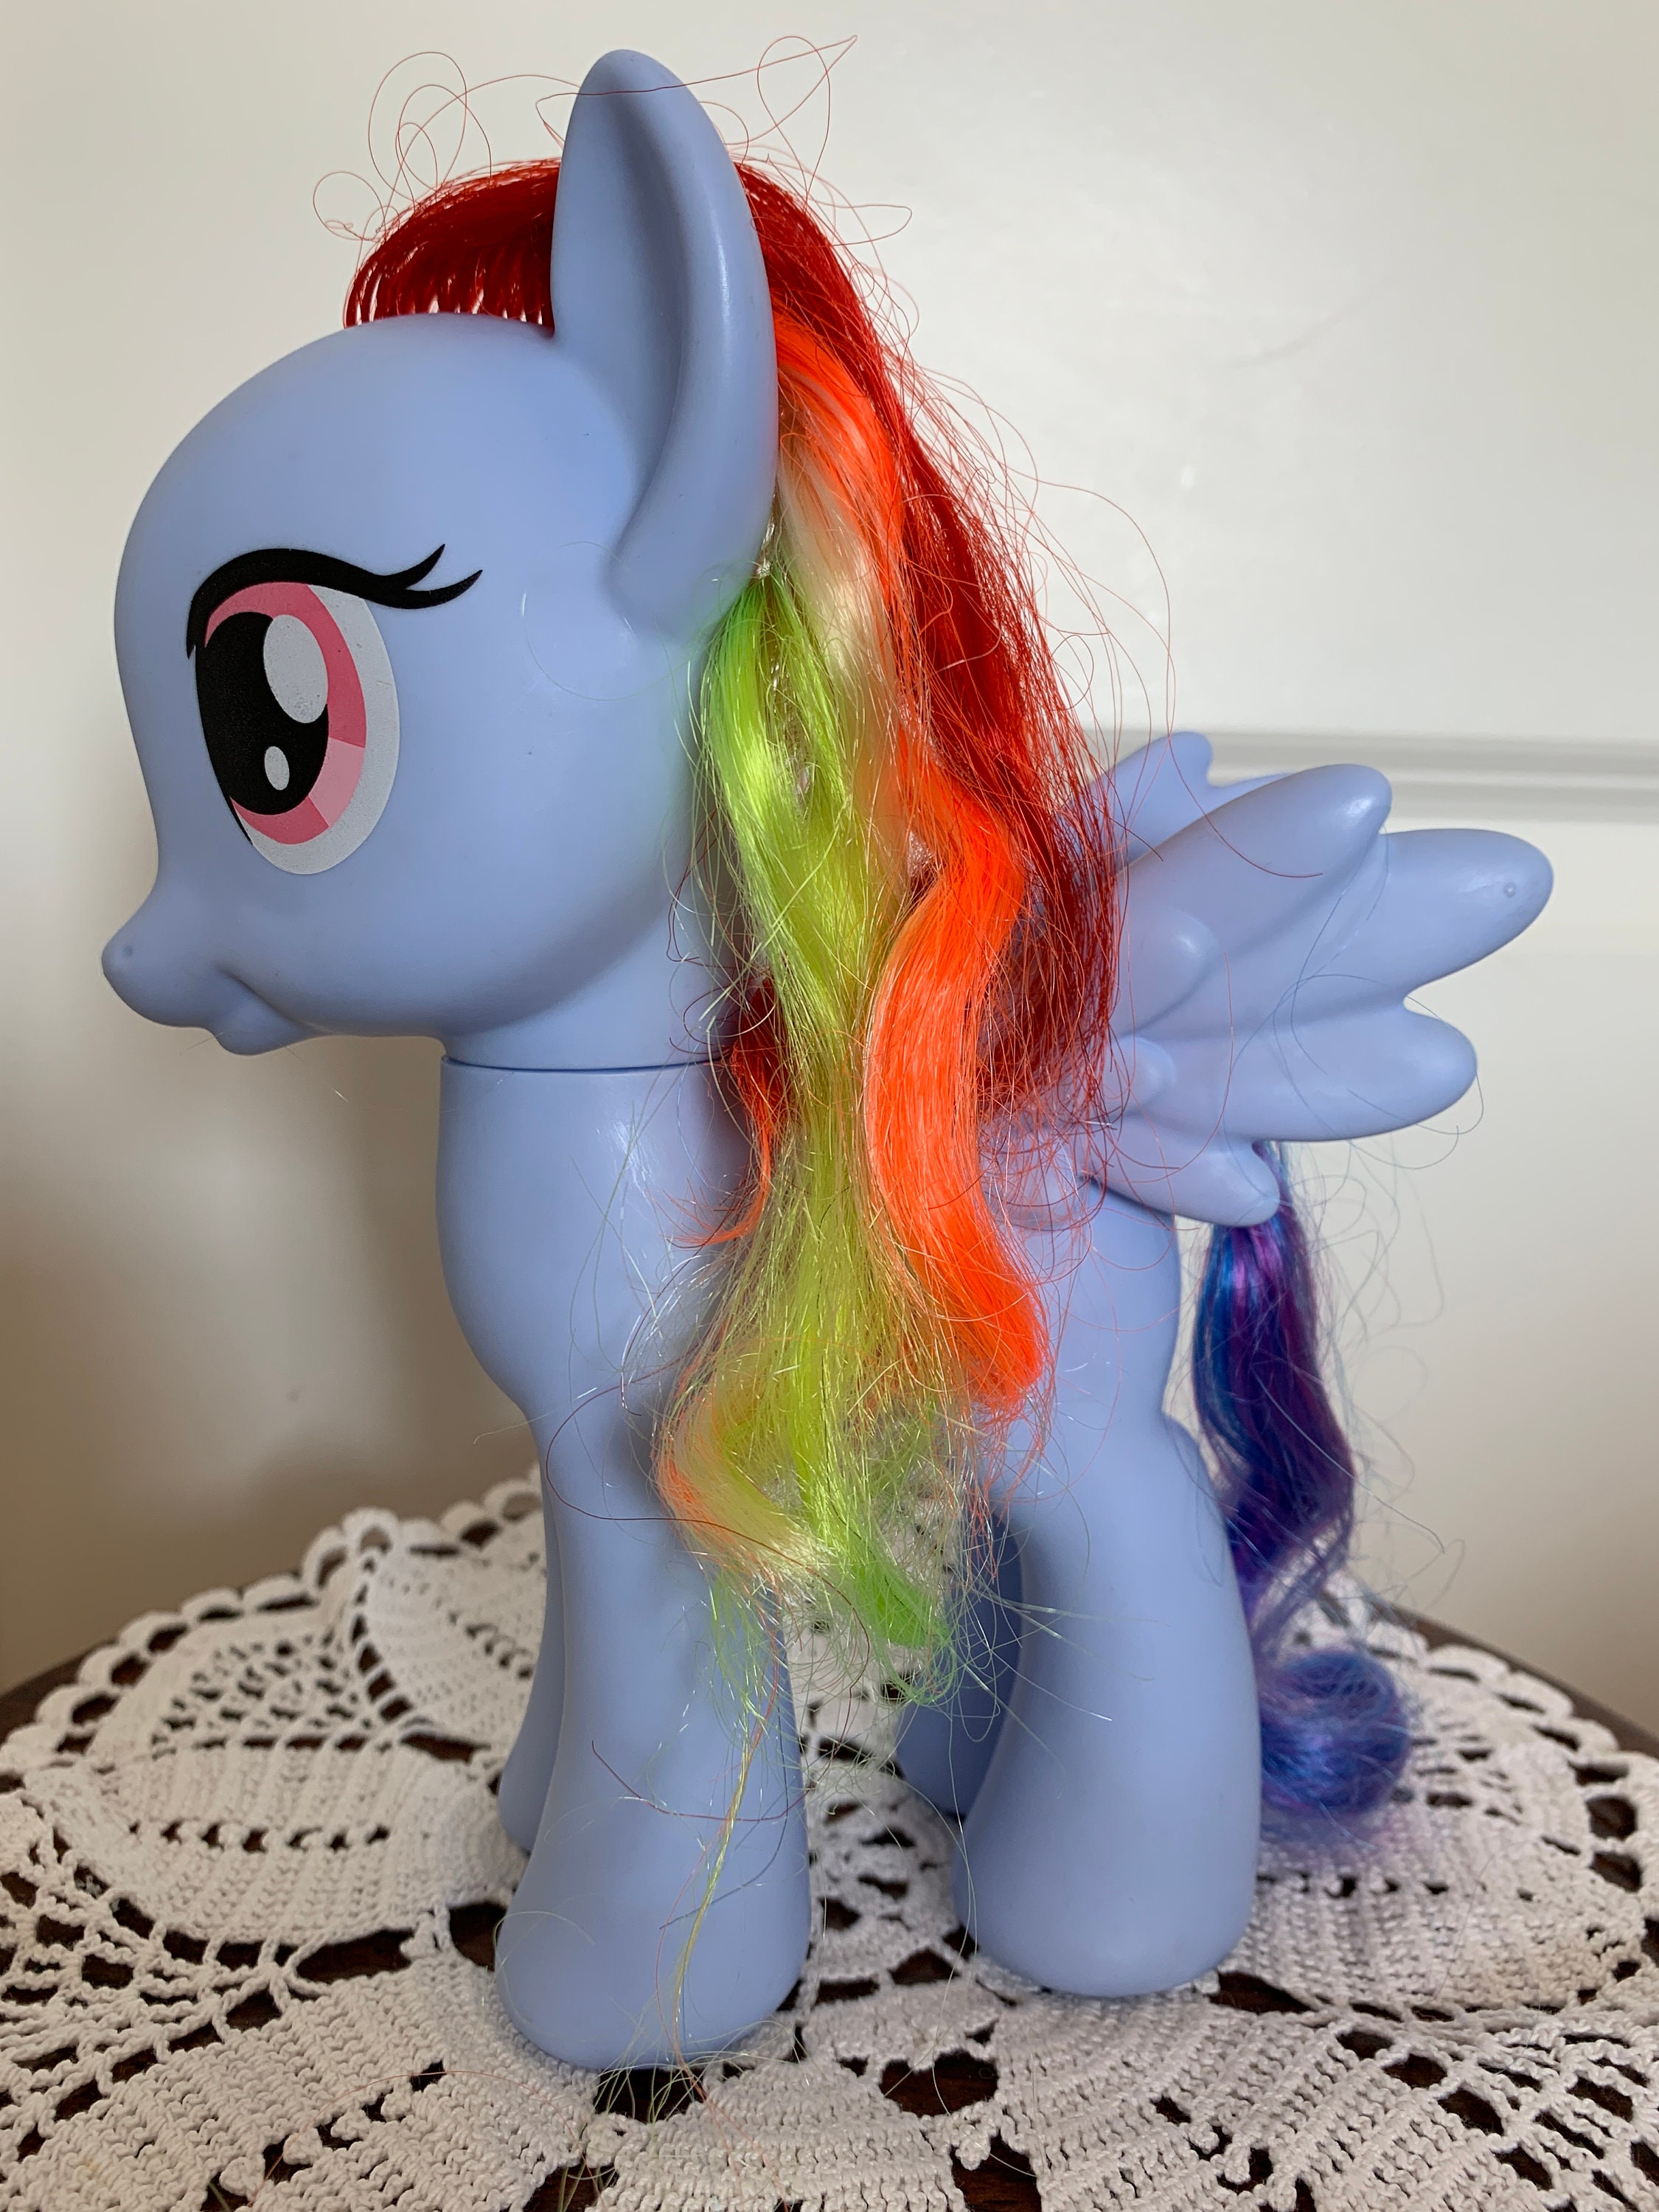 My Little Pony Rainbow Dash Potion Pony Figure - Brinquedo de